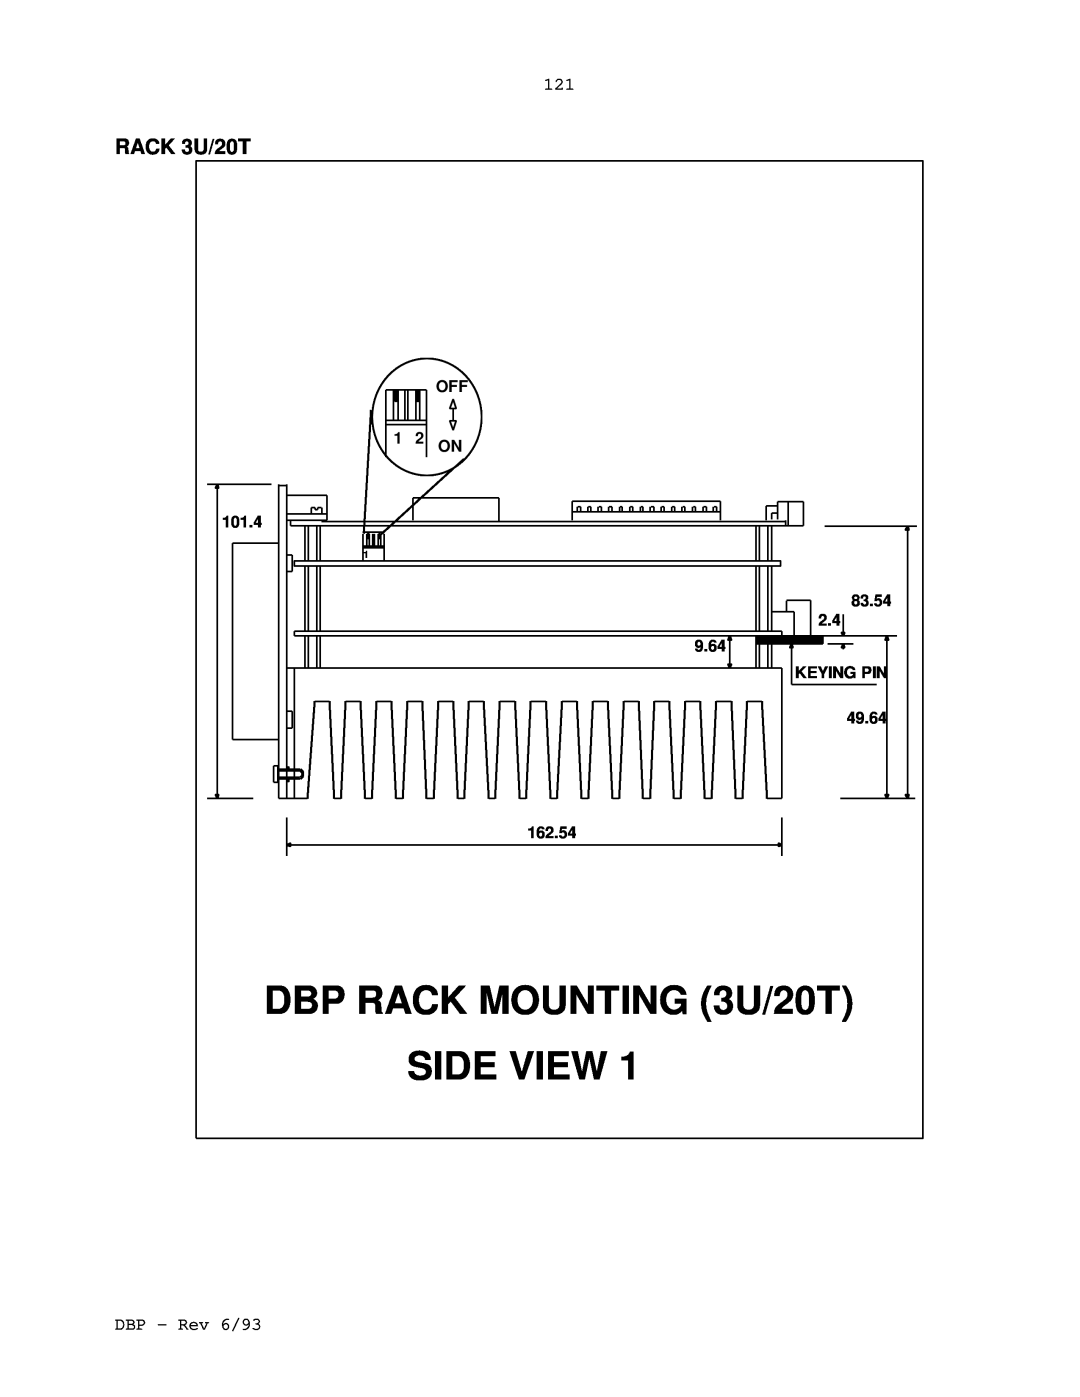 Elmo DBP SERIES manual DBP RACK MOUNTING 3U/20T, RACK 3U/20T, Side View, 83.54, Keying Pin, 49.64, 162.54 